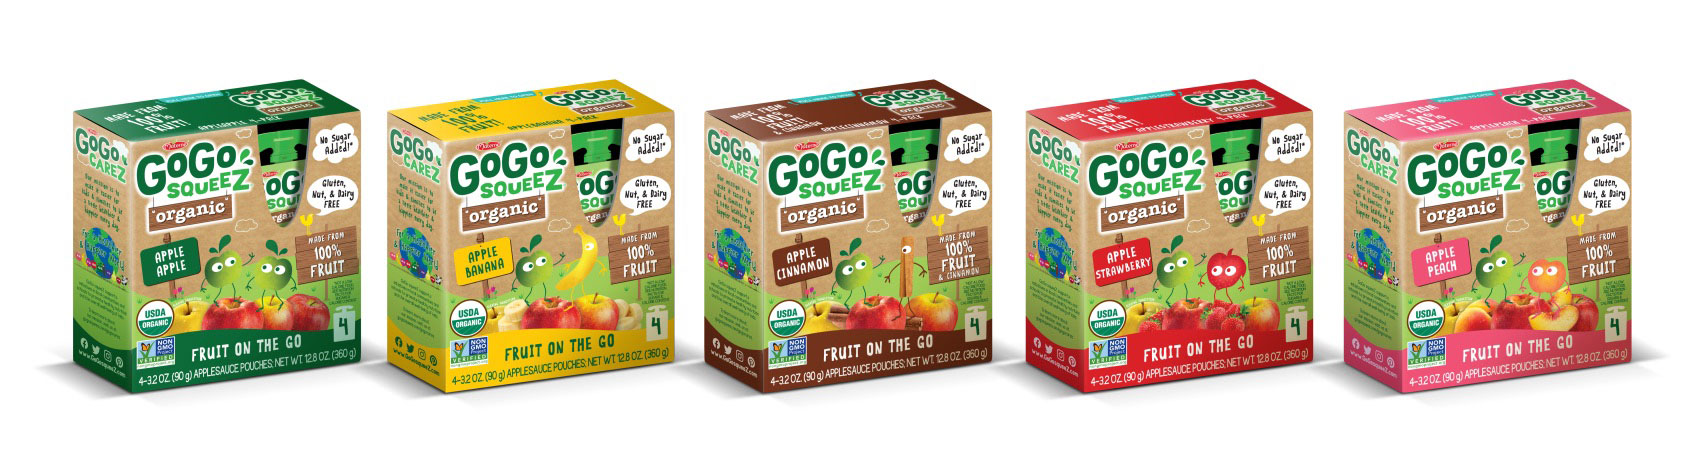 GoGo squeeZ x4 Organic Flavors